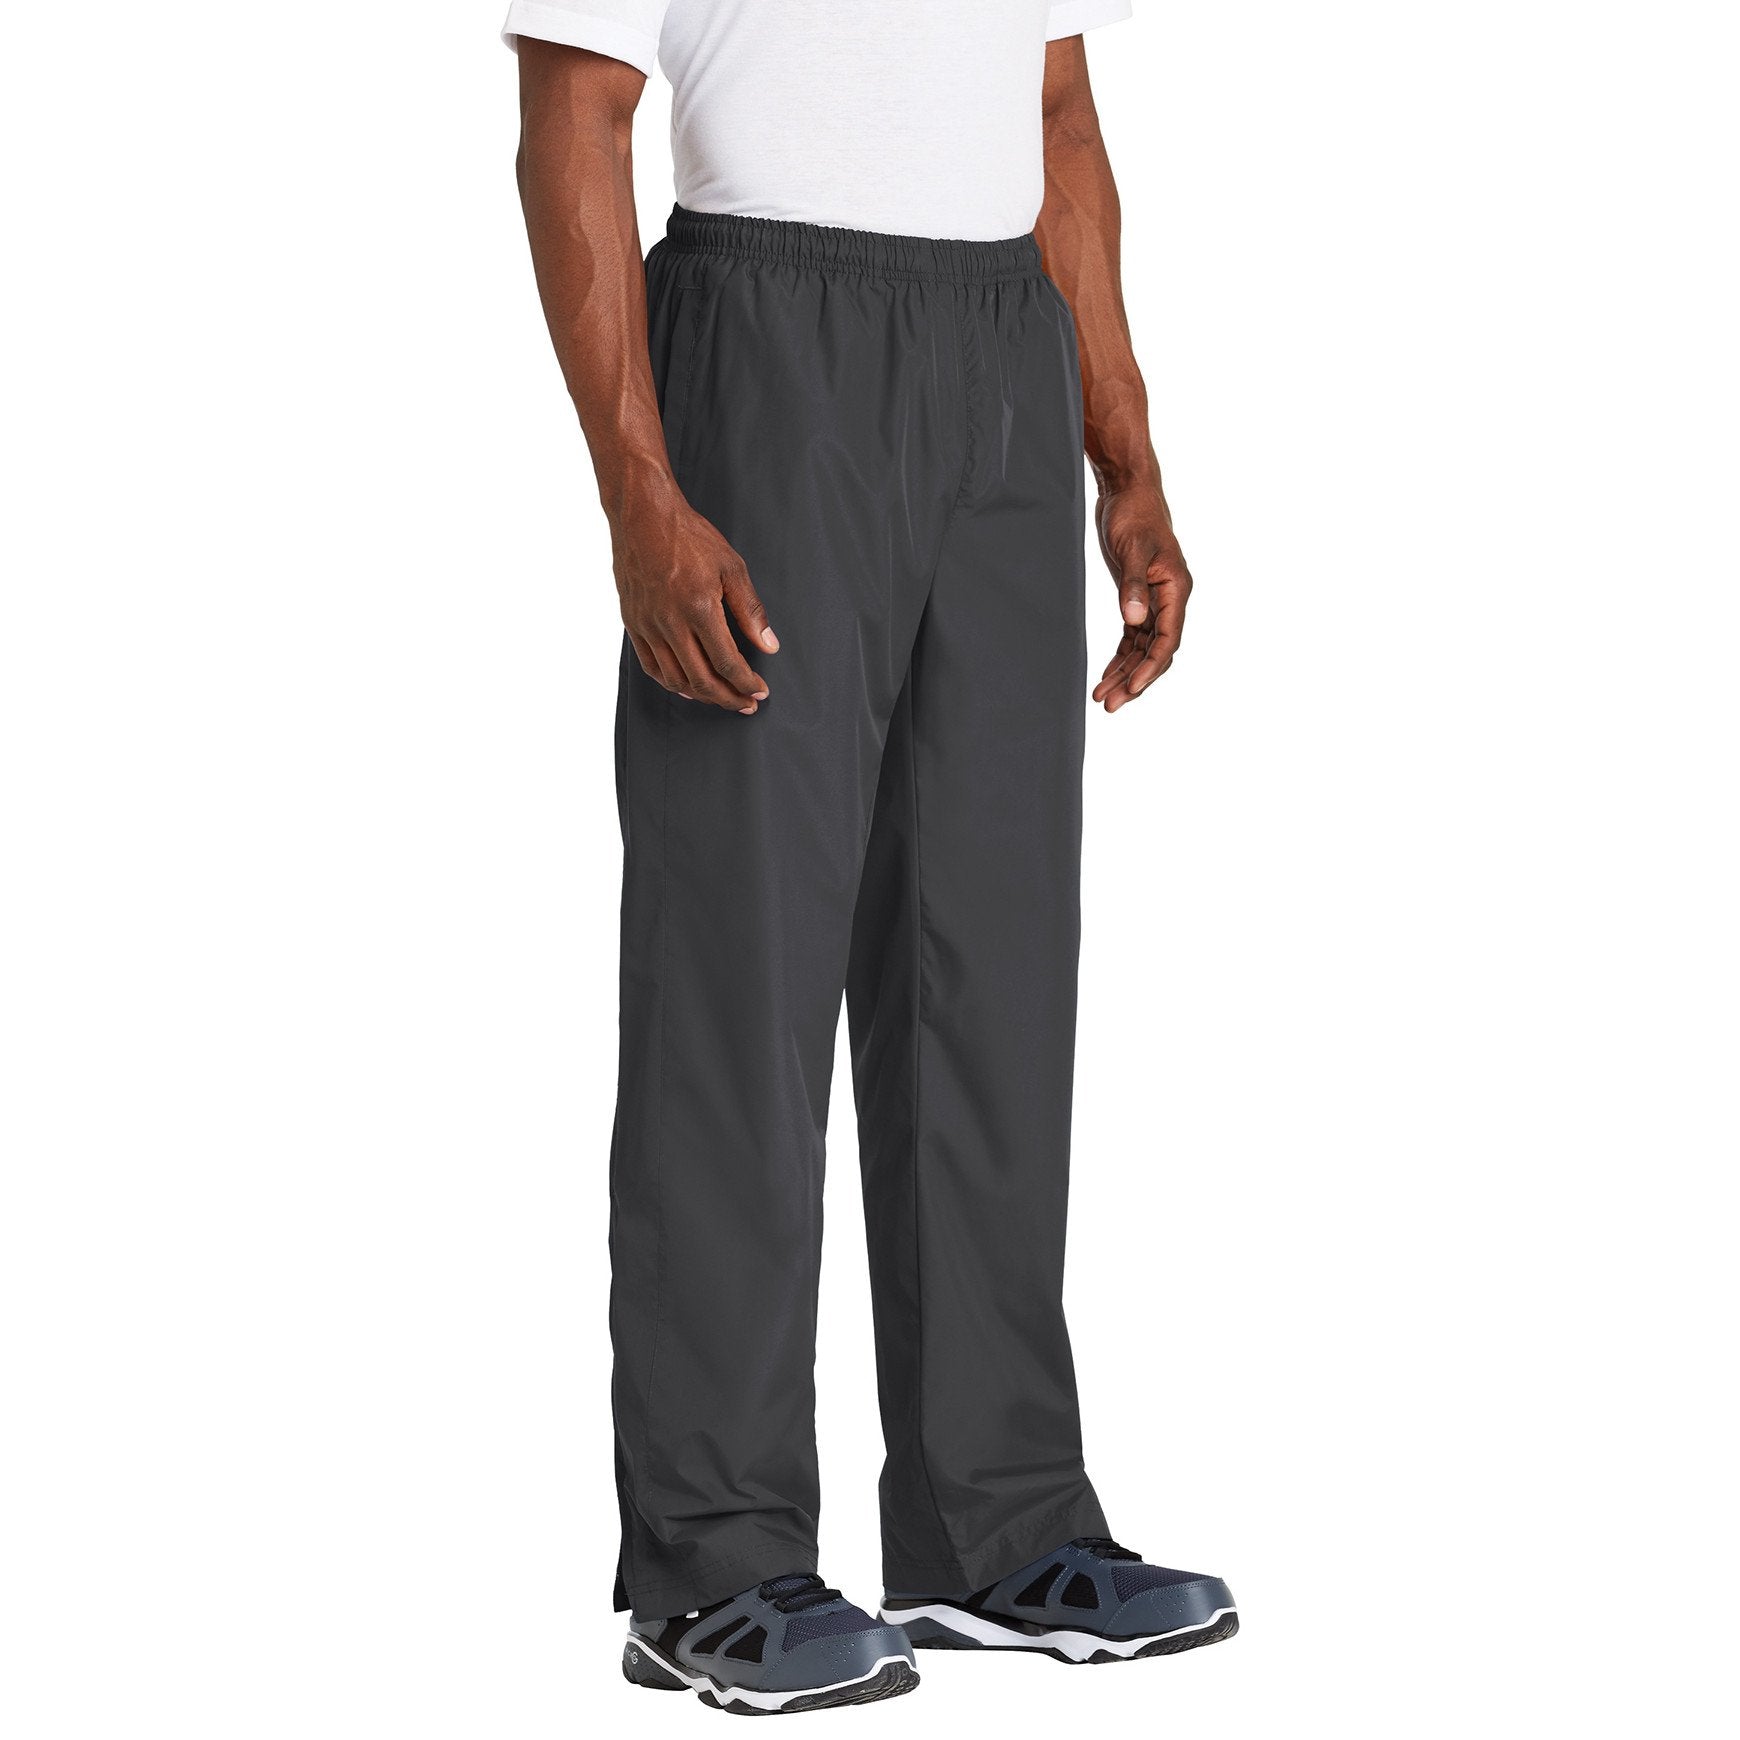 Buy Silver Track Pants for Men by Adidas Originals Online  Ajiocom